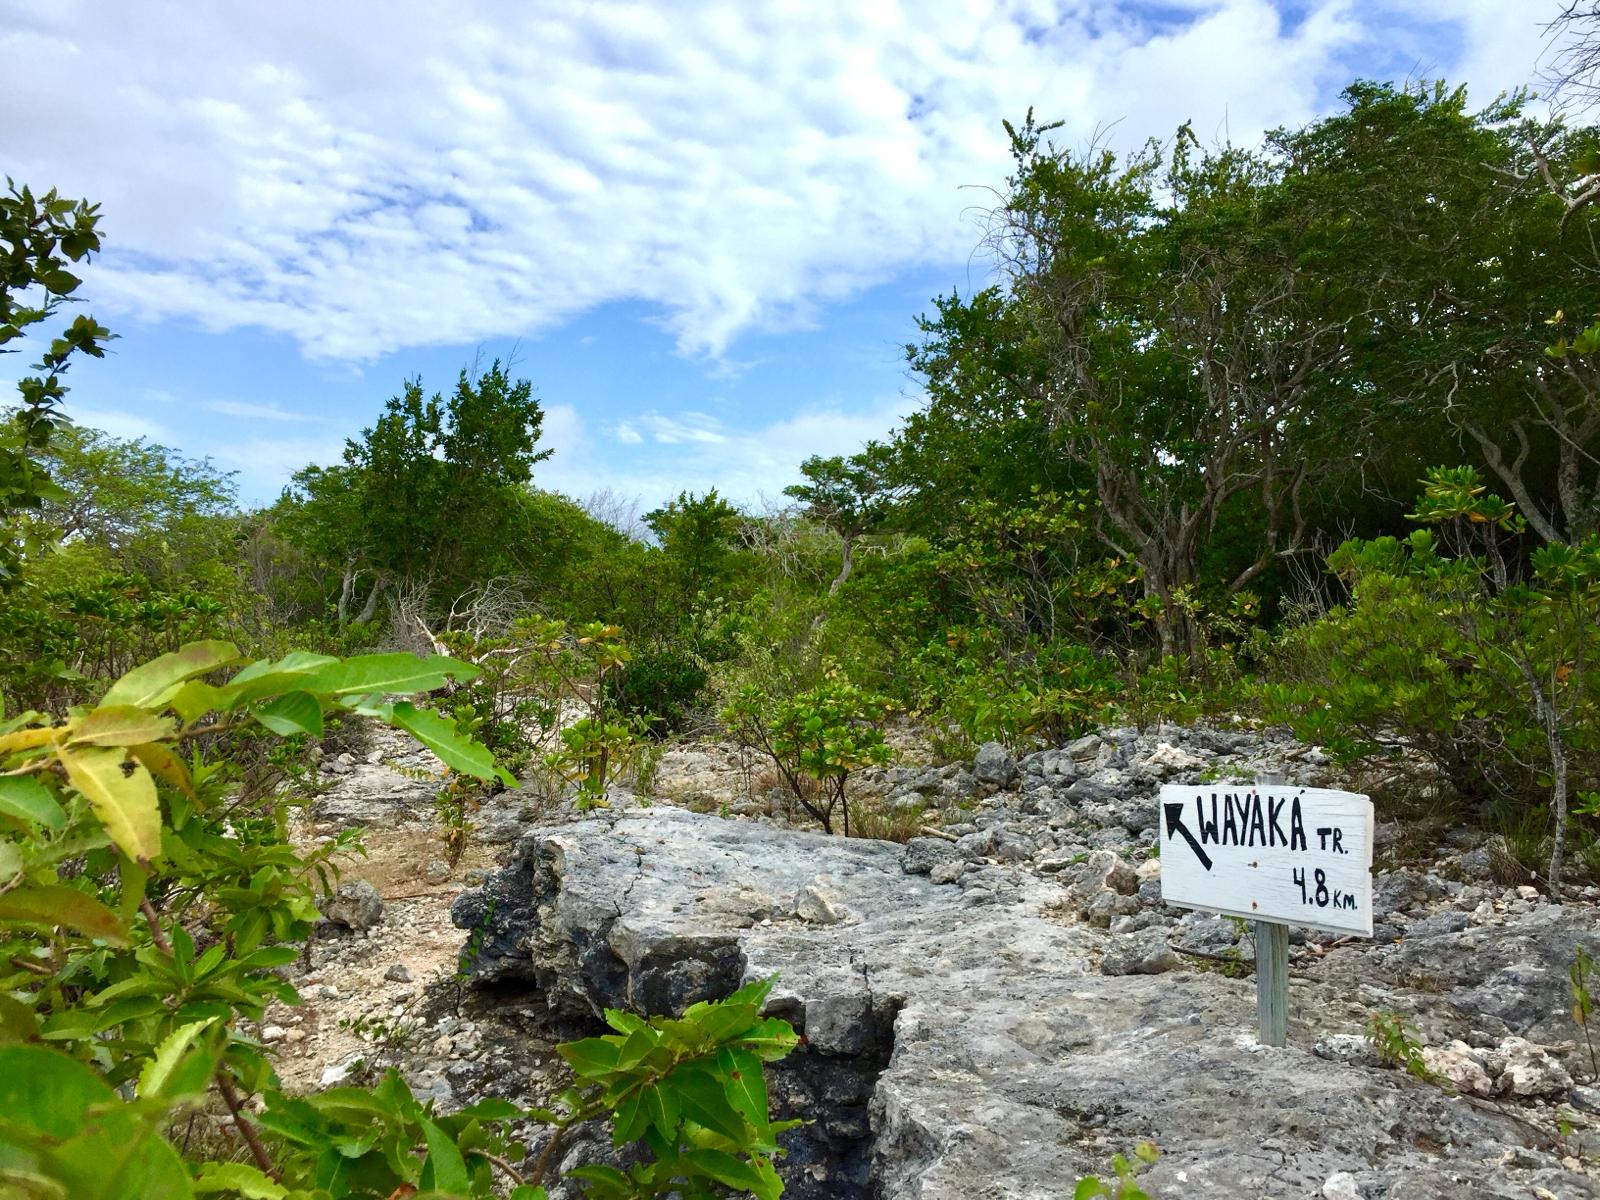 vWandelen op Bonaire: de Wayaka trail